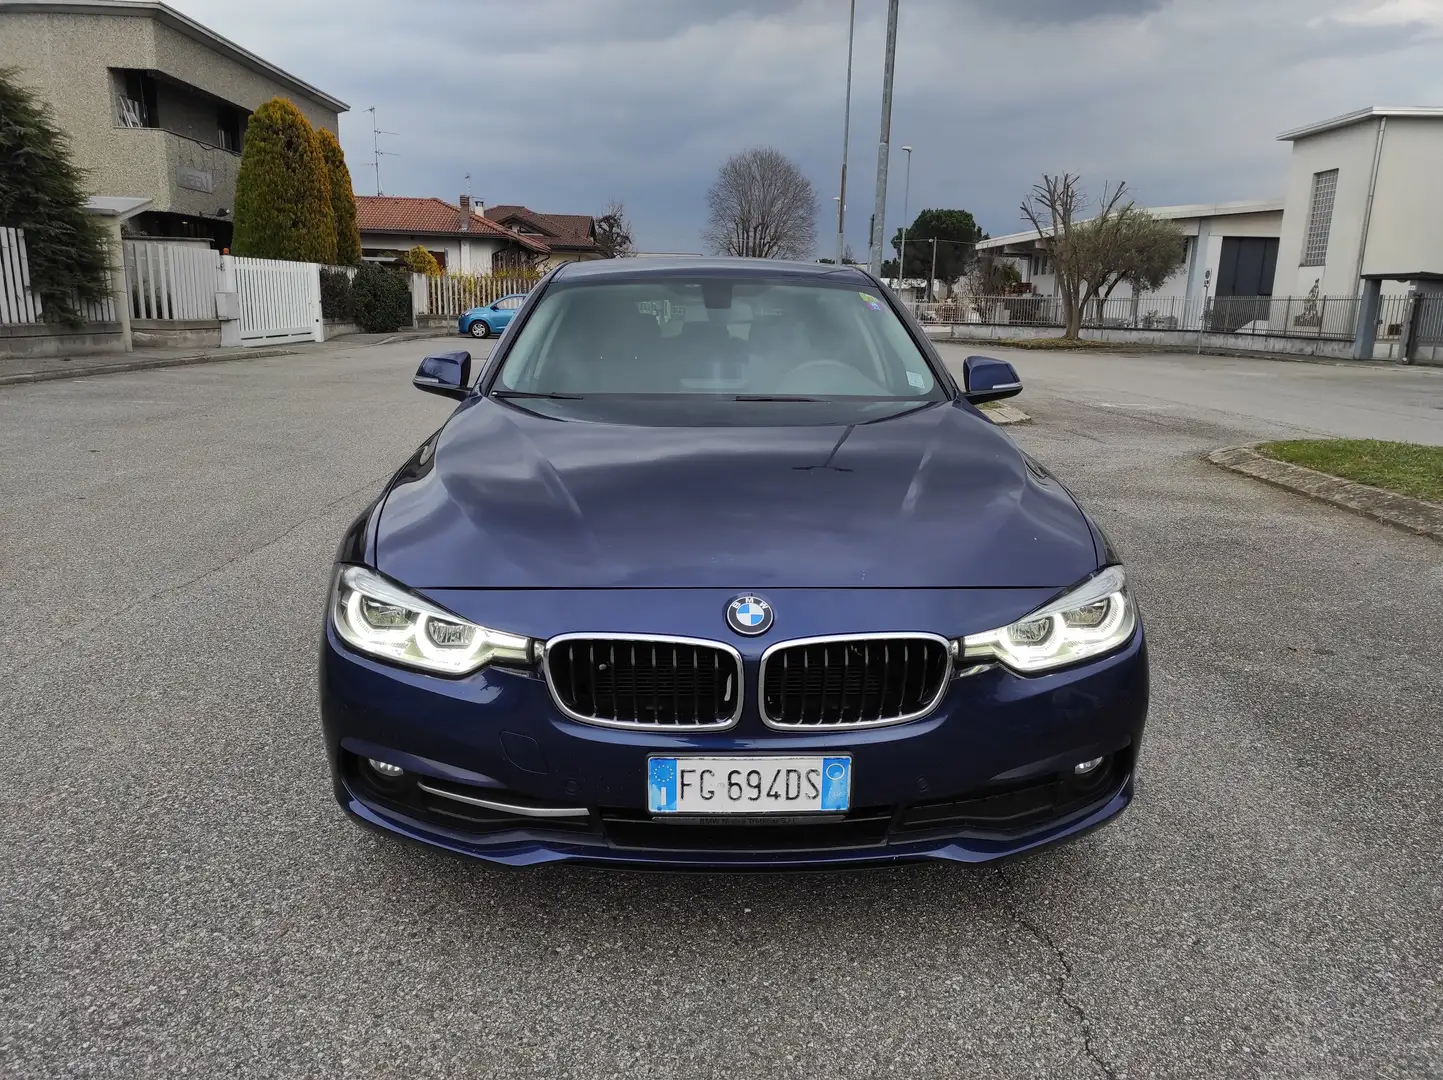 usato BMW 320 Station wagon a Samarate - Varese - VA per € 11.900,-